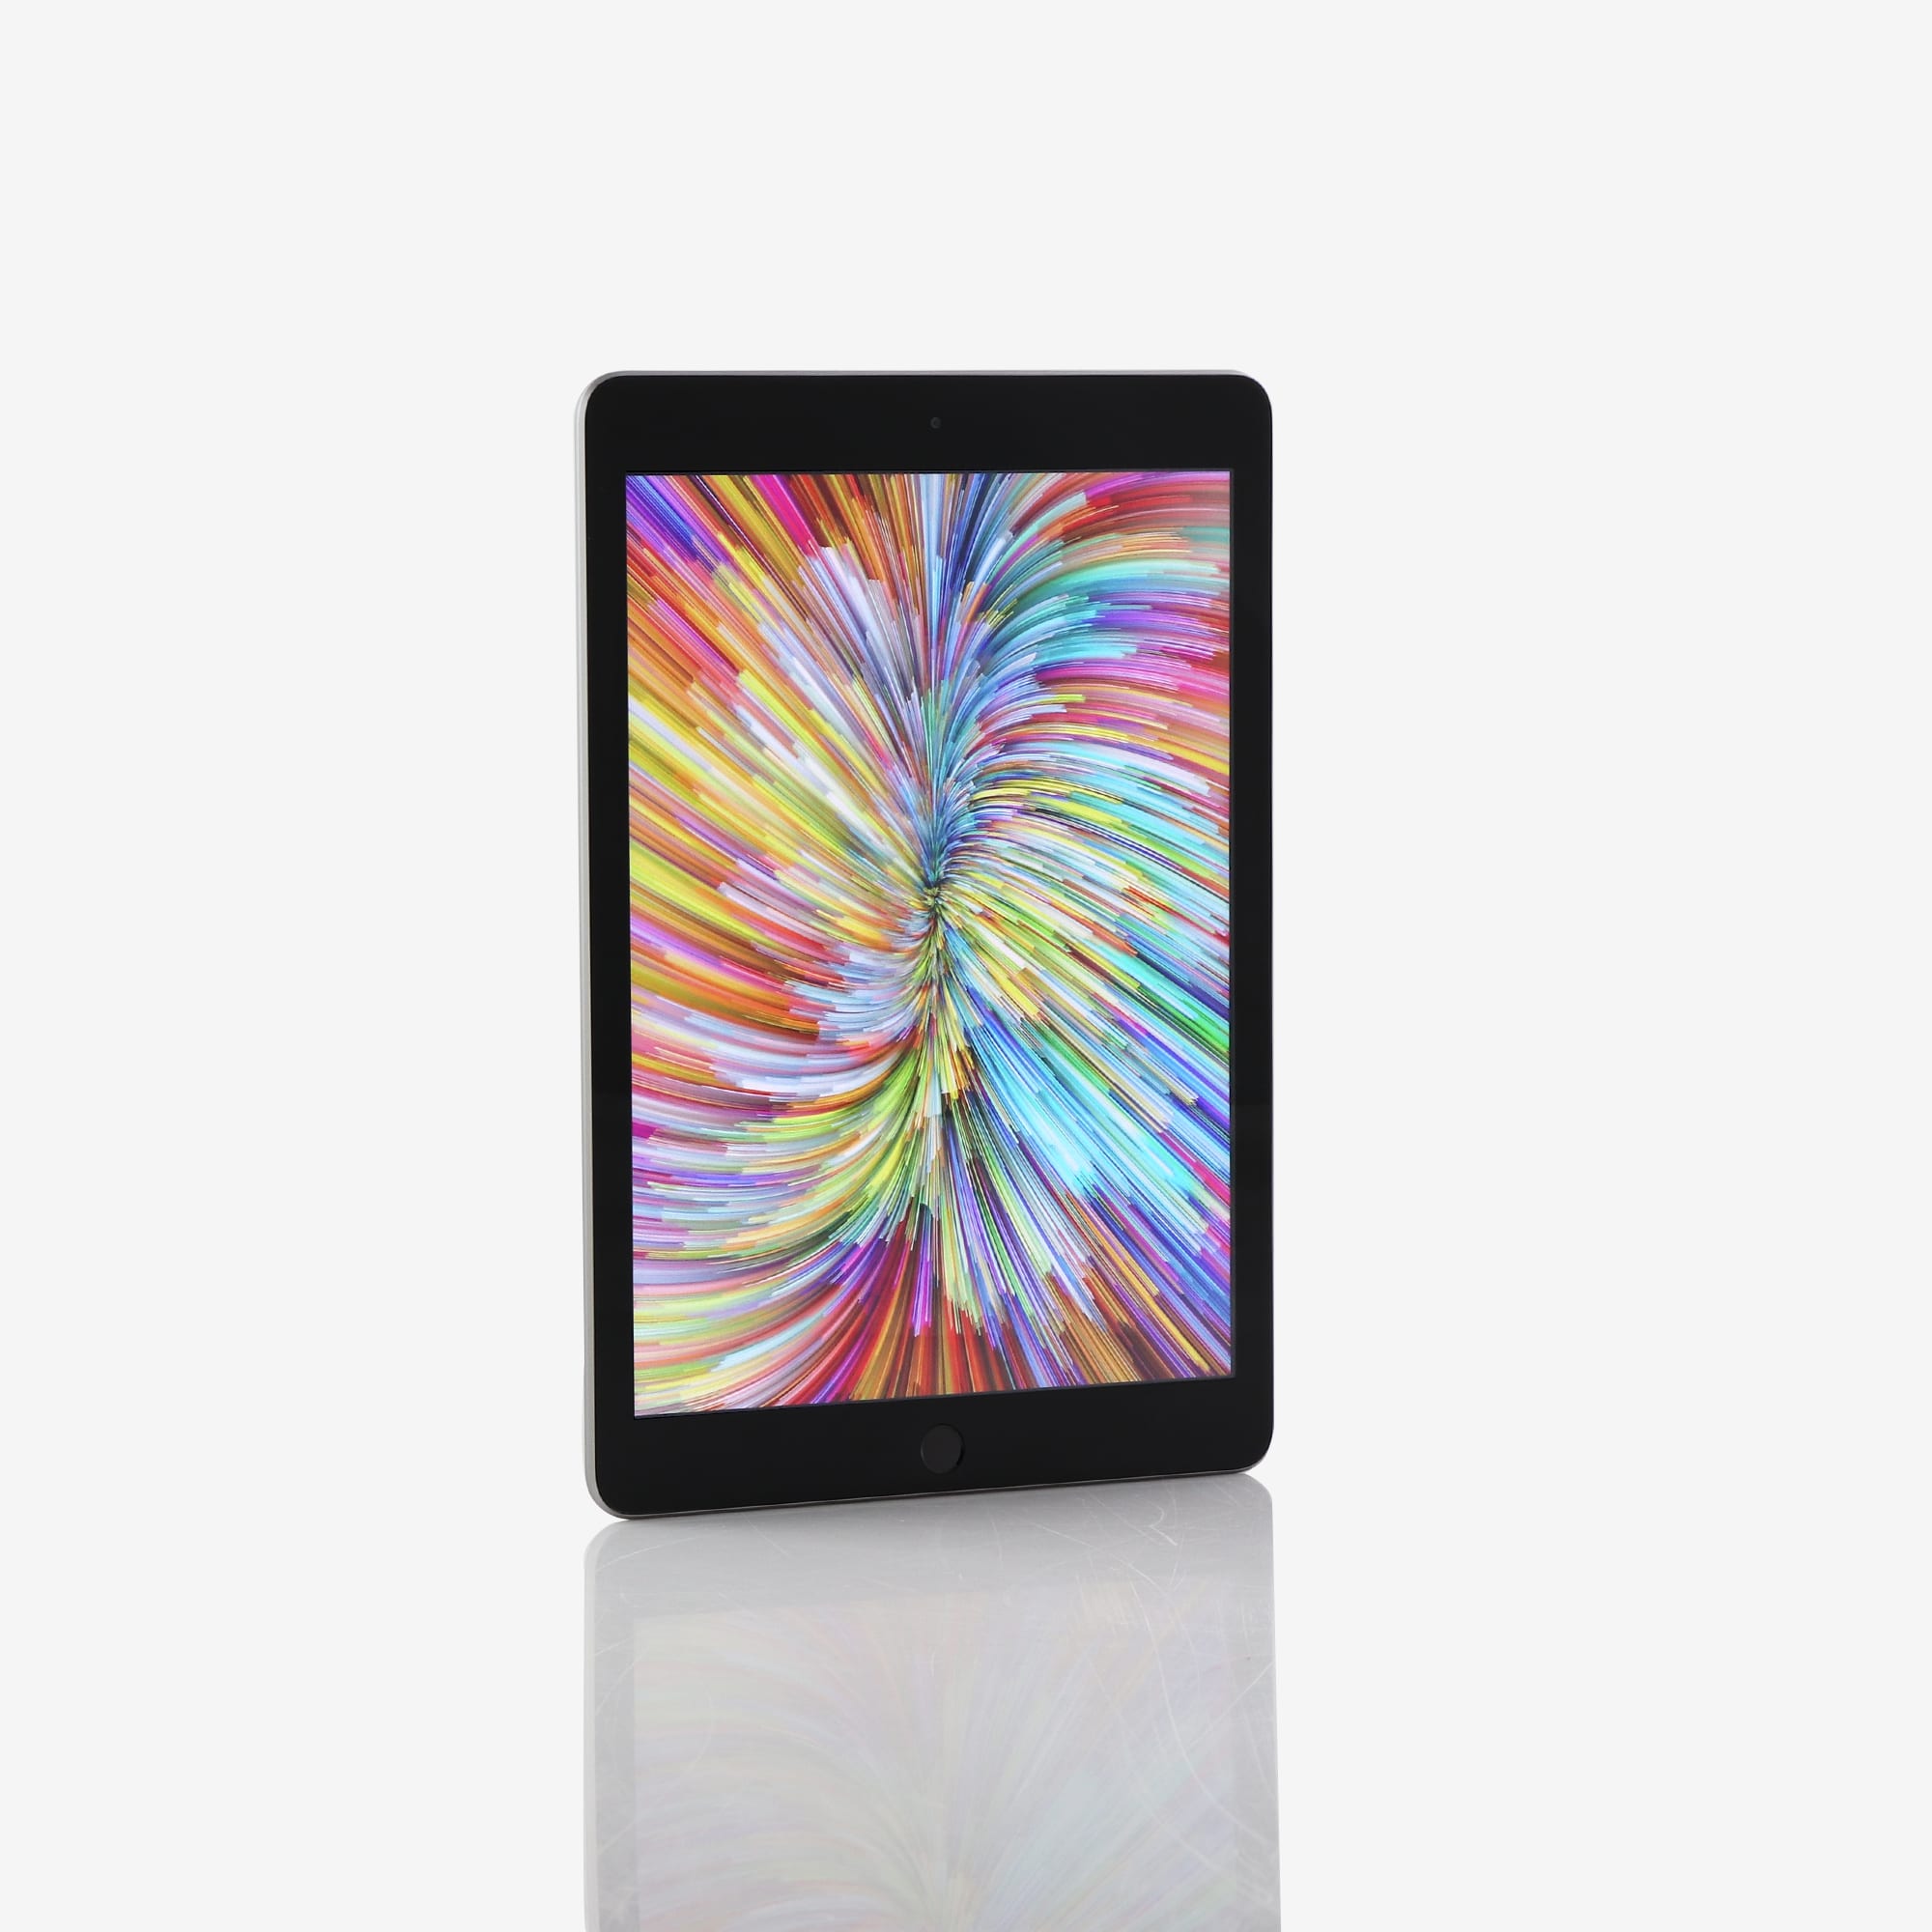 1 x iPad (6th generation) (Wi-Fi) Space Grey